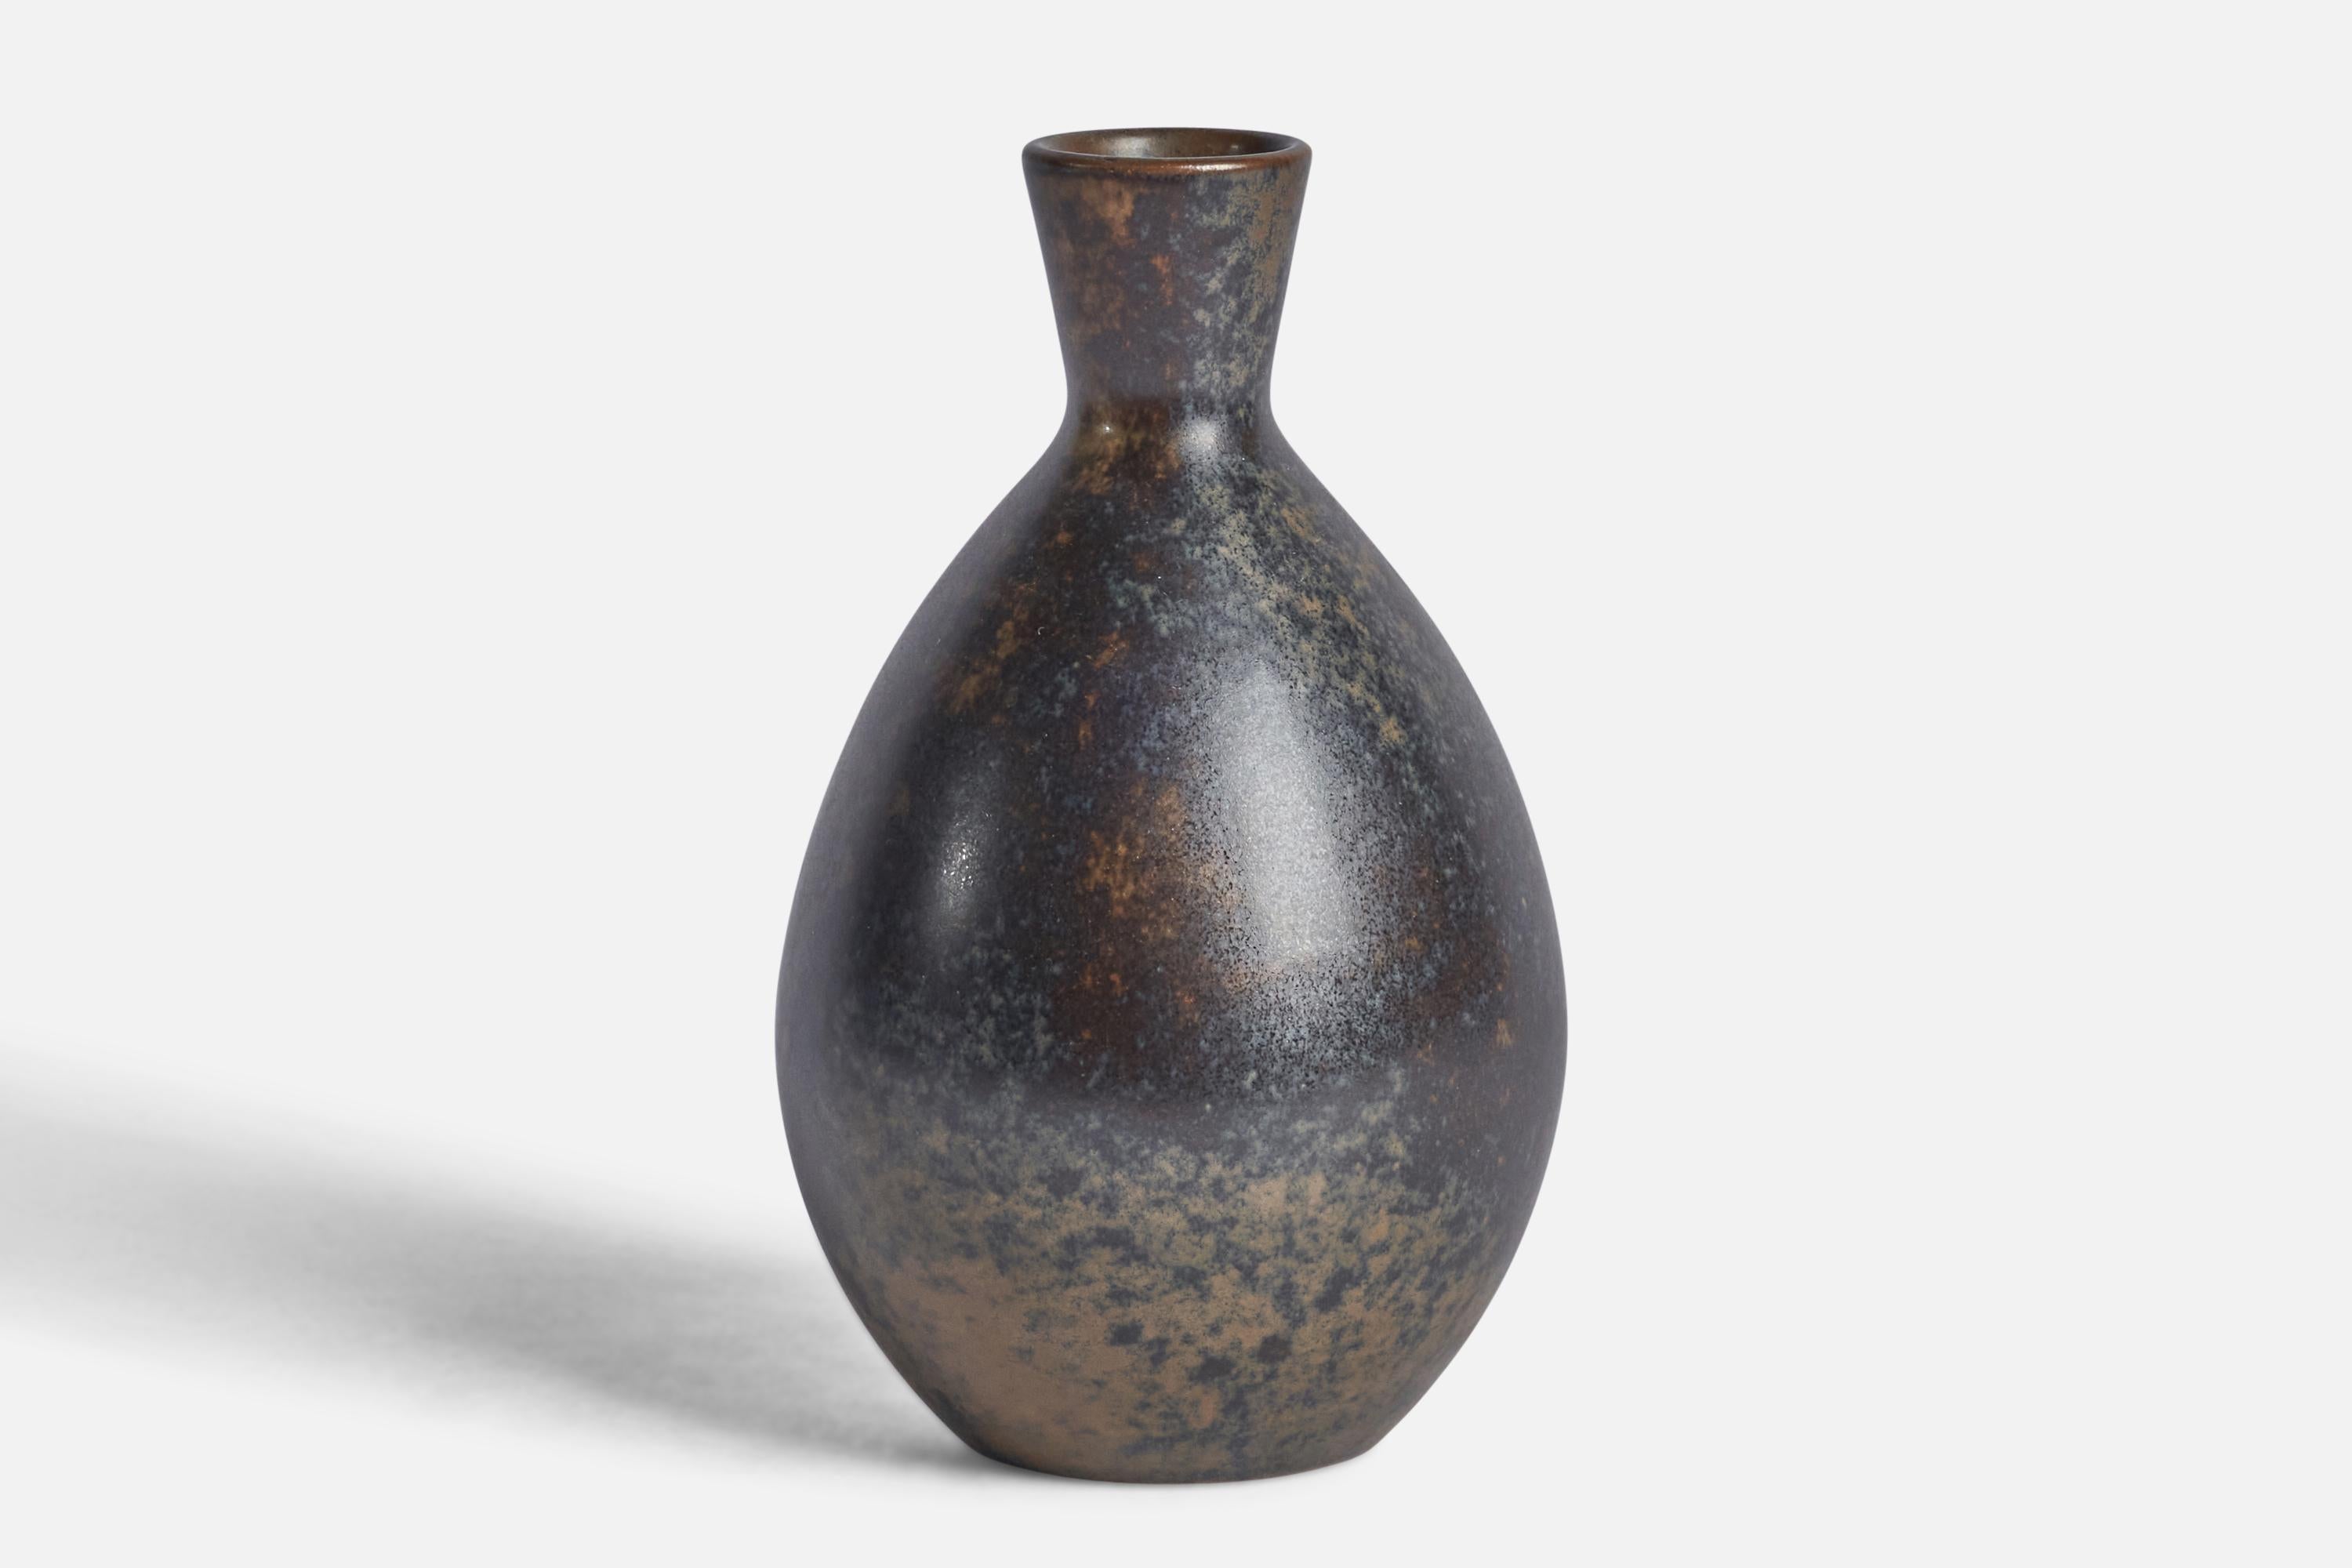 A black-glazed stoneware vase designed and produced by Erich and Inger Triller in Sweden, c. 1960s.